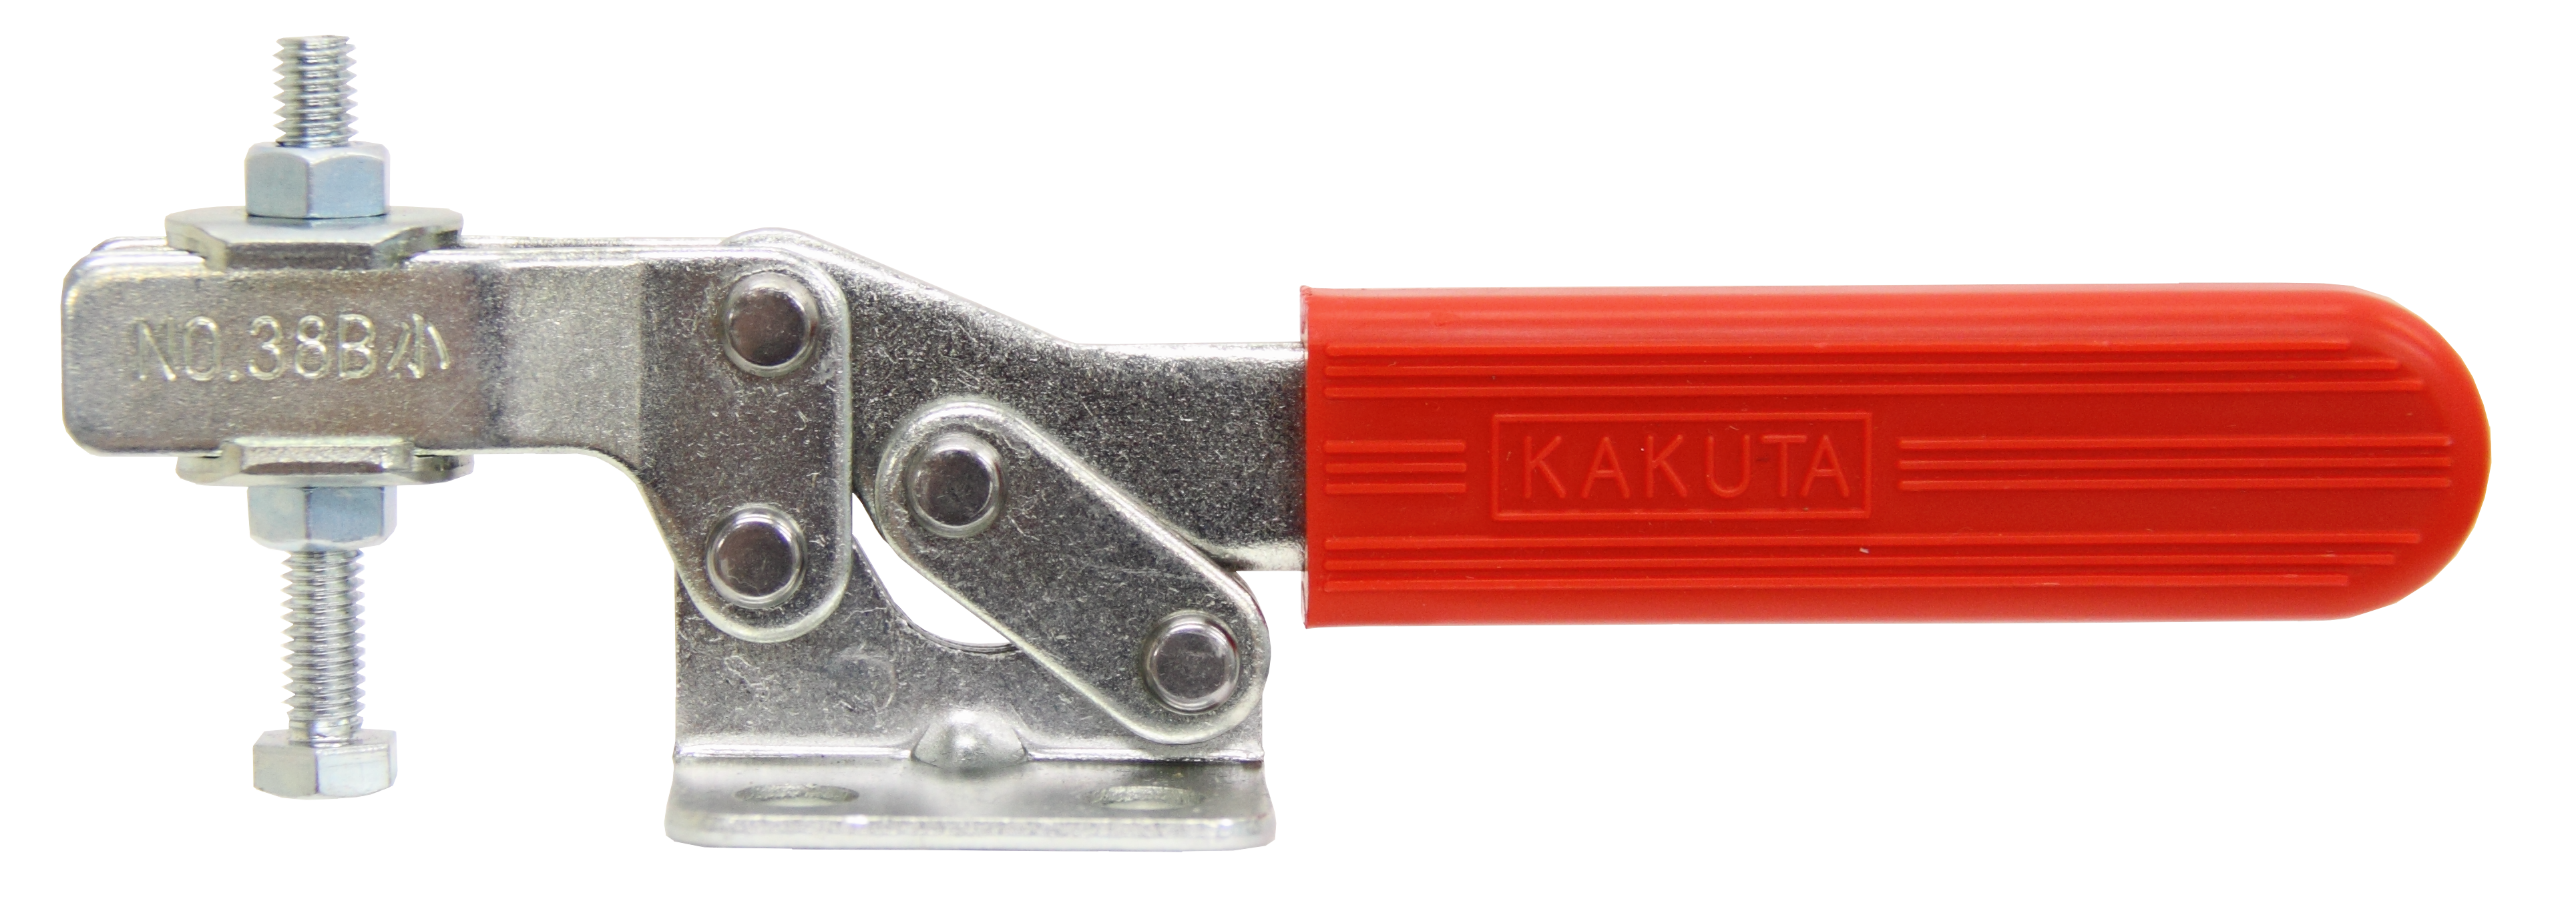 KAKUTA TOGGLE CLAMPS（カクタ株式会社）のカタログ無料ダウンロード | Apérza Catalog（アペルザカタログ） |  ものづくり産業向けカタログサイト